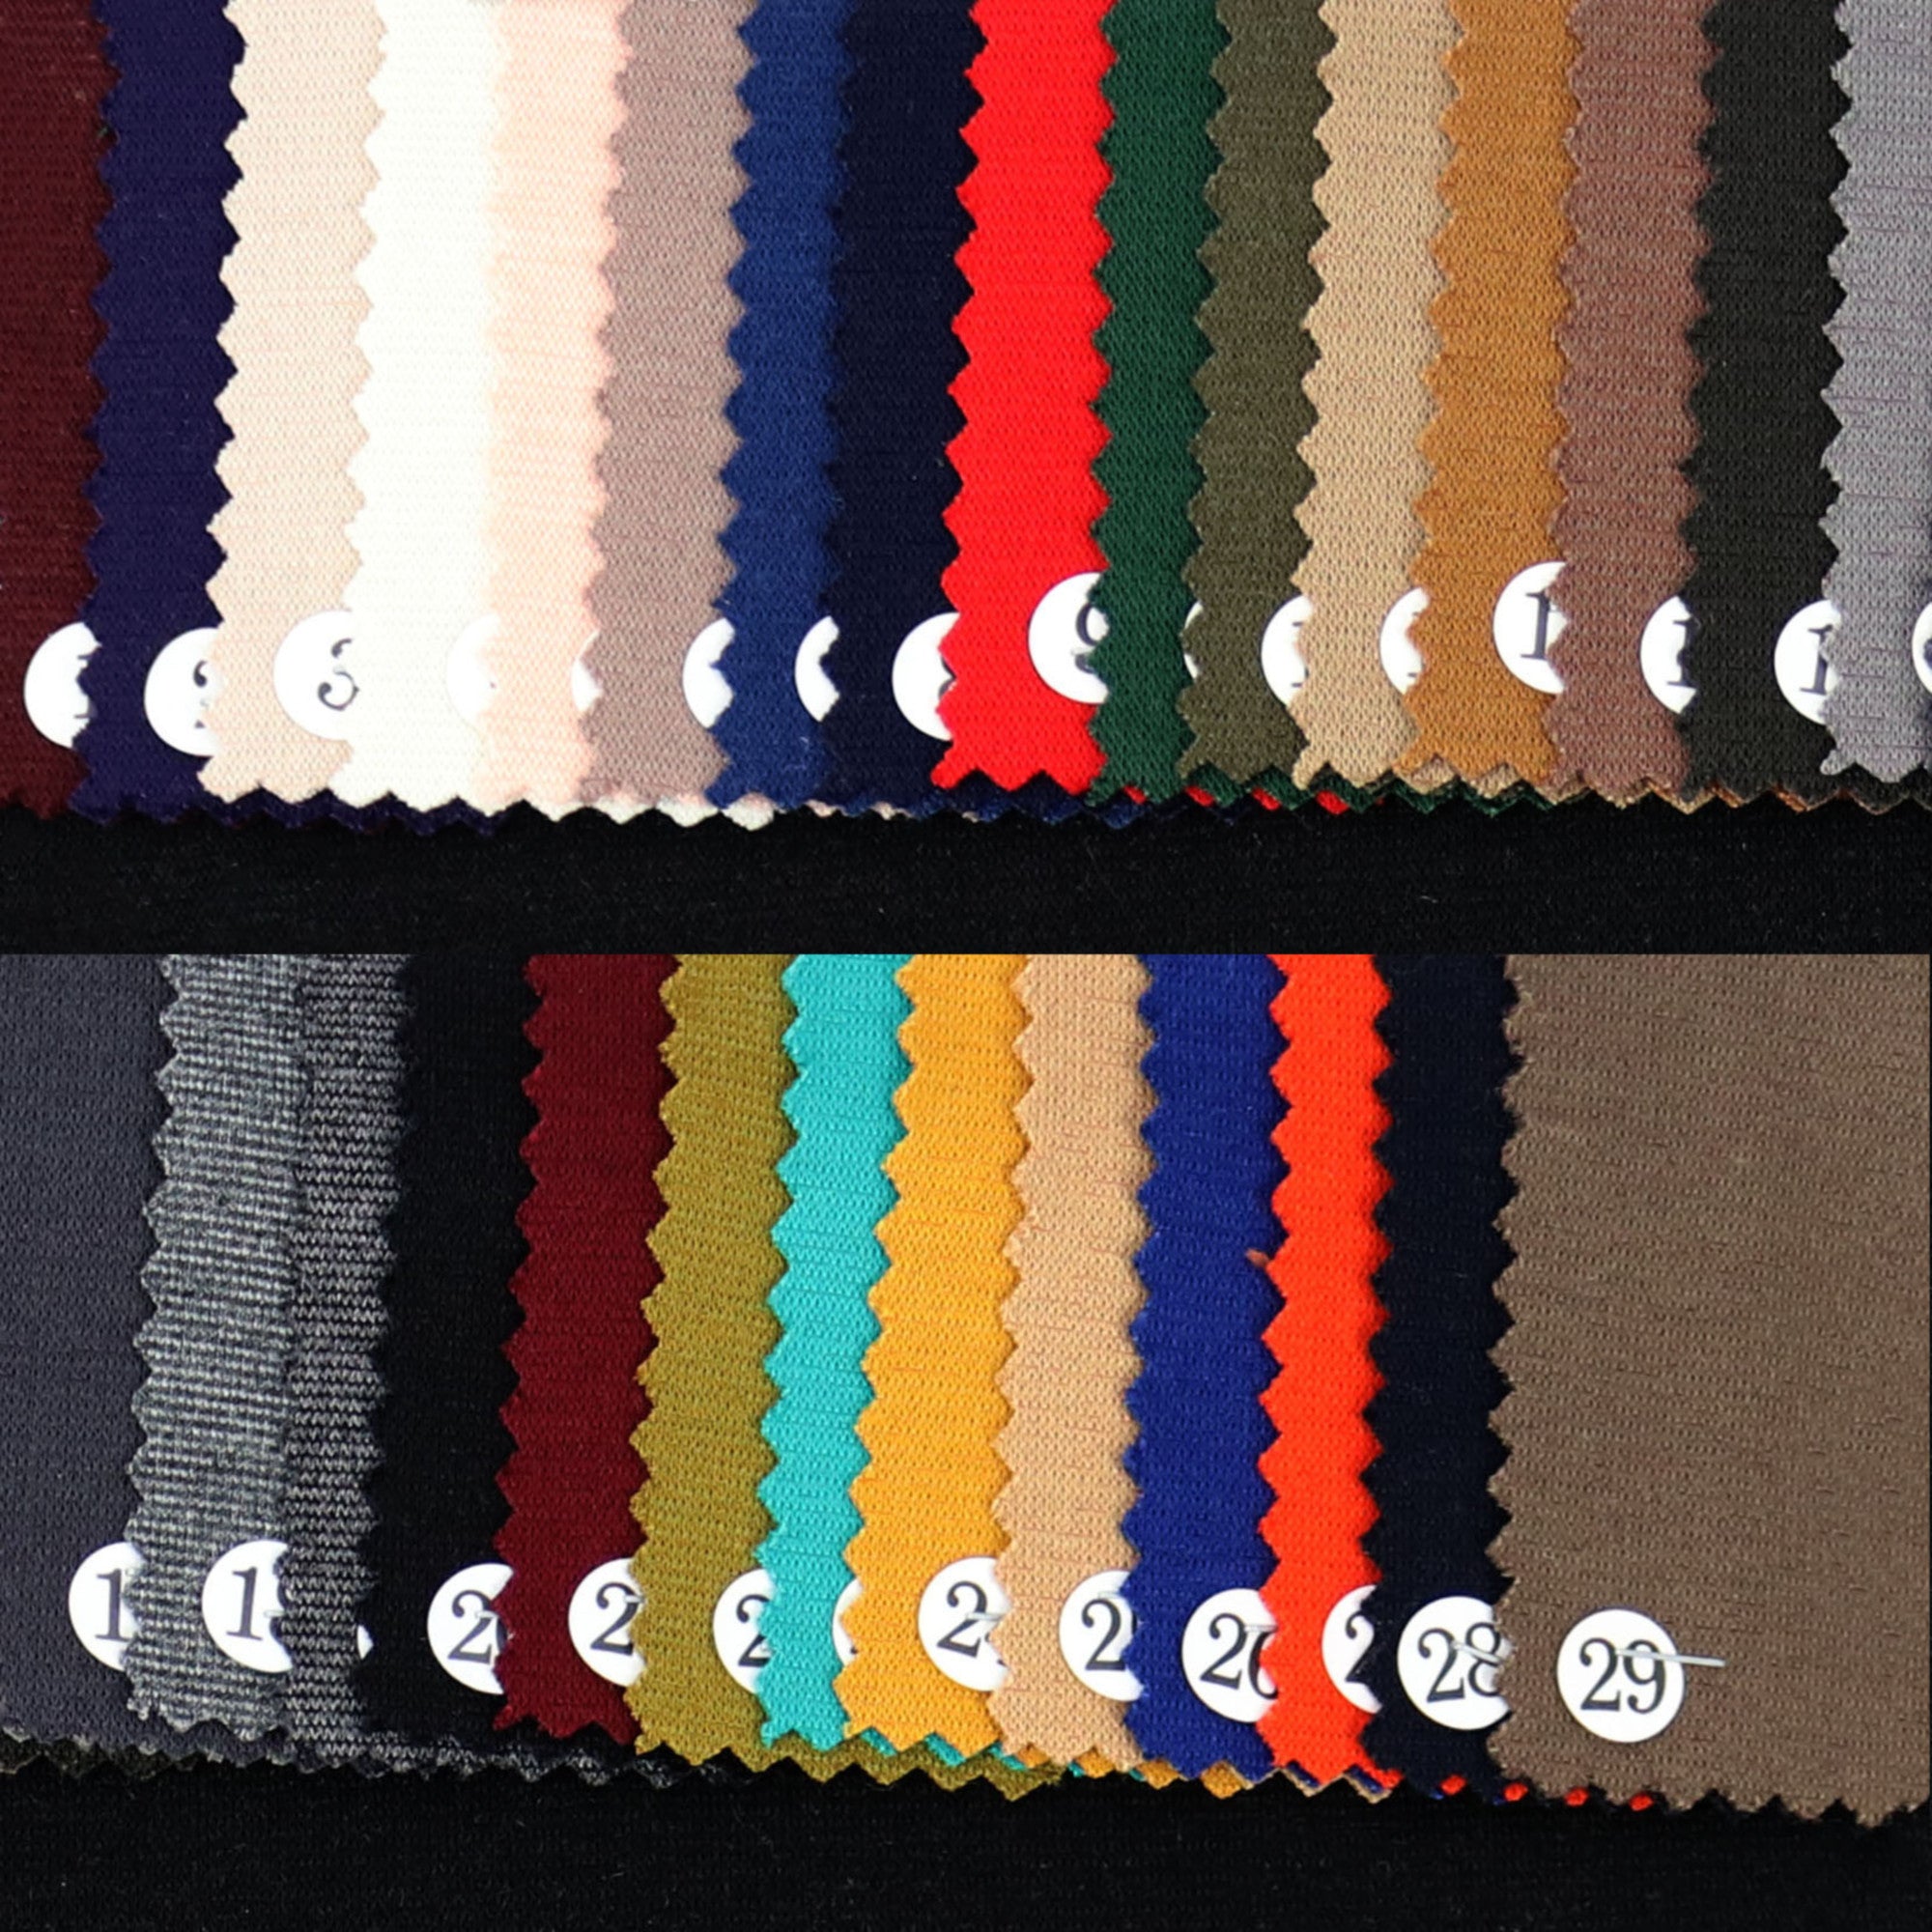 Black Polyester Rayon Spandex Knit Jersey Fabric - SKU 2499 — Nick